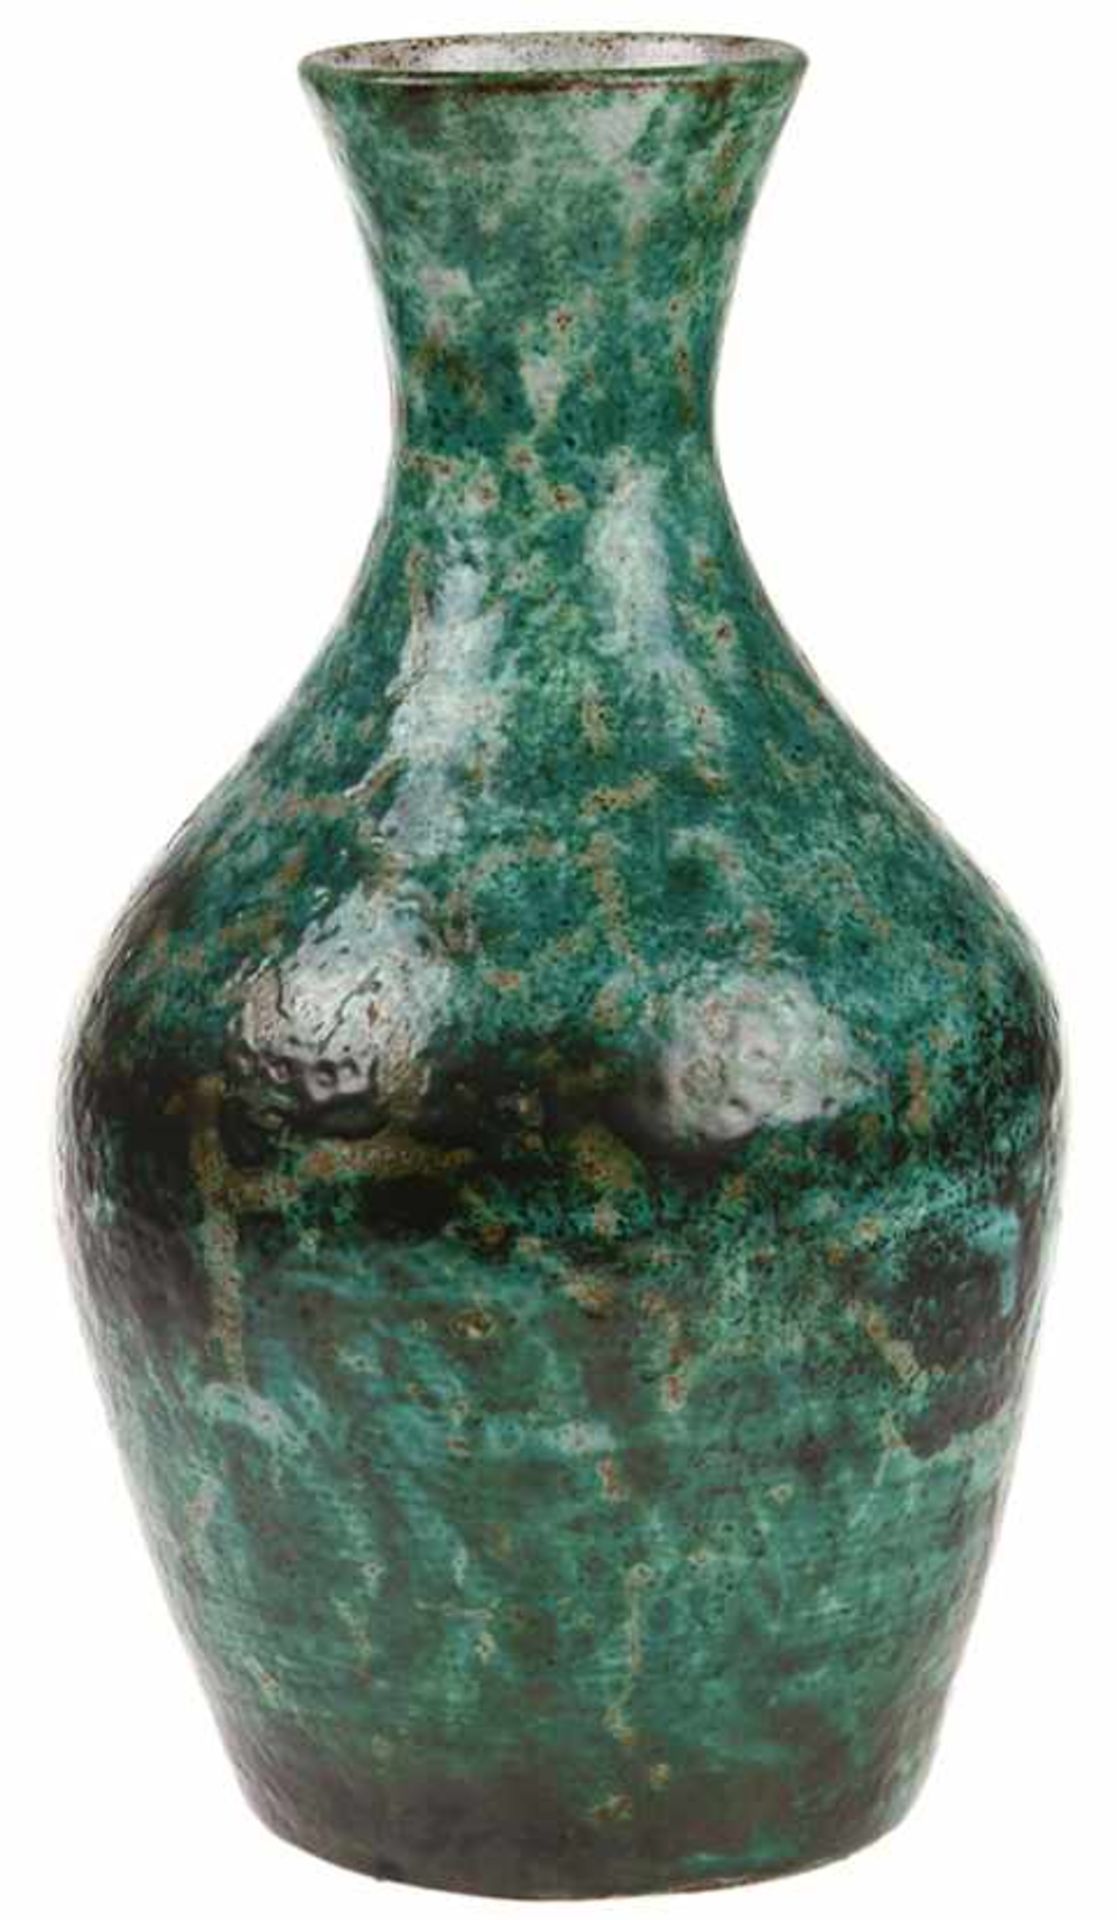 Groene geaderde aardewerk vaas, gesigneerd Robert Picaud, Vallauris, jaren '50/'60 -h. ca. 33 cm.-